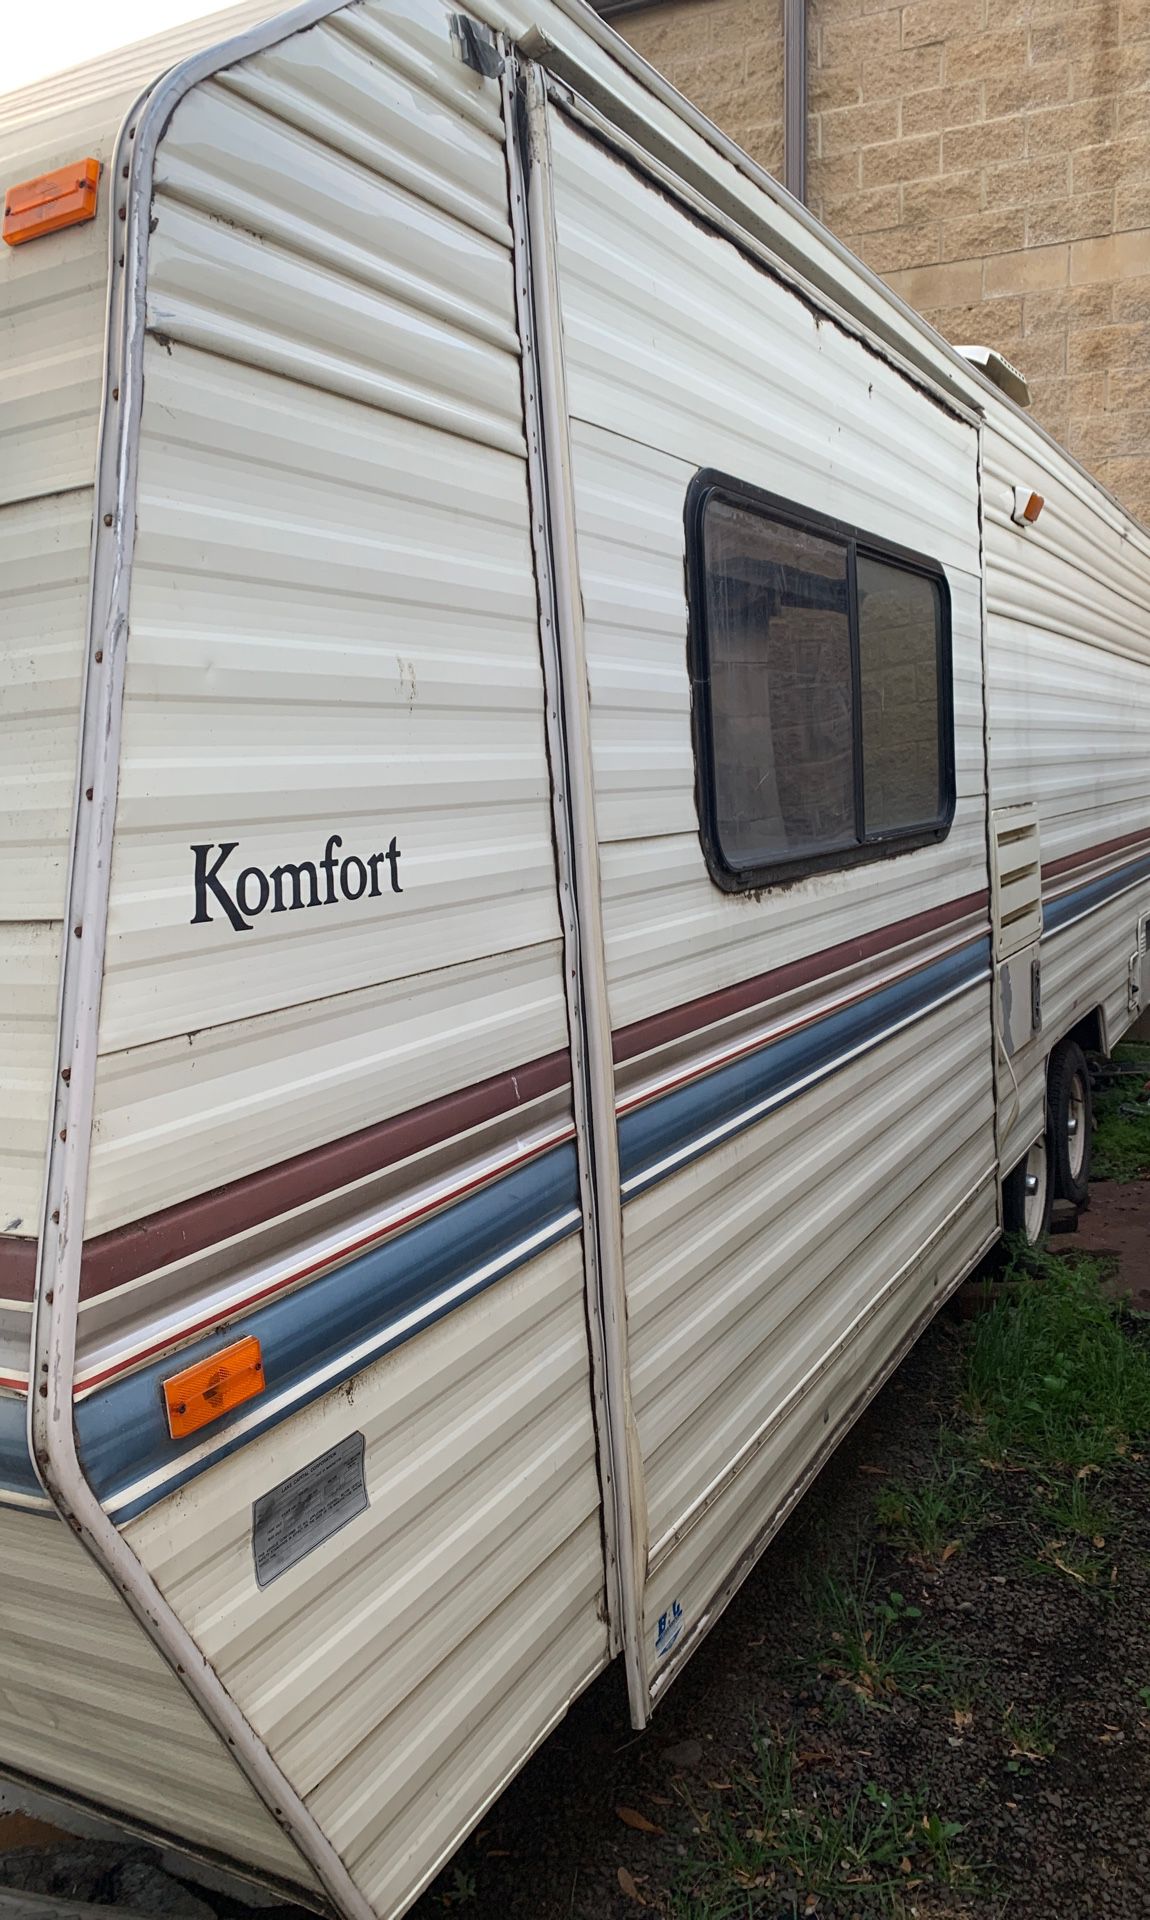 1992 komfort 24 foot trailer